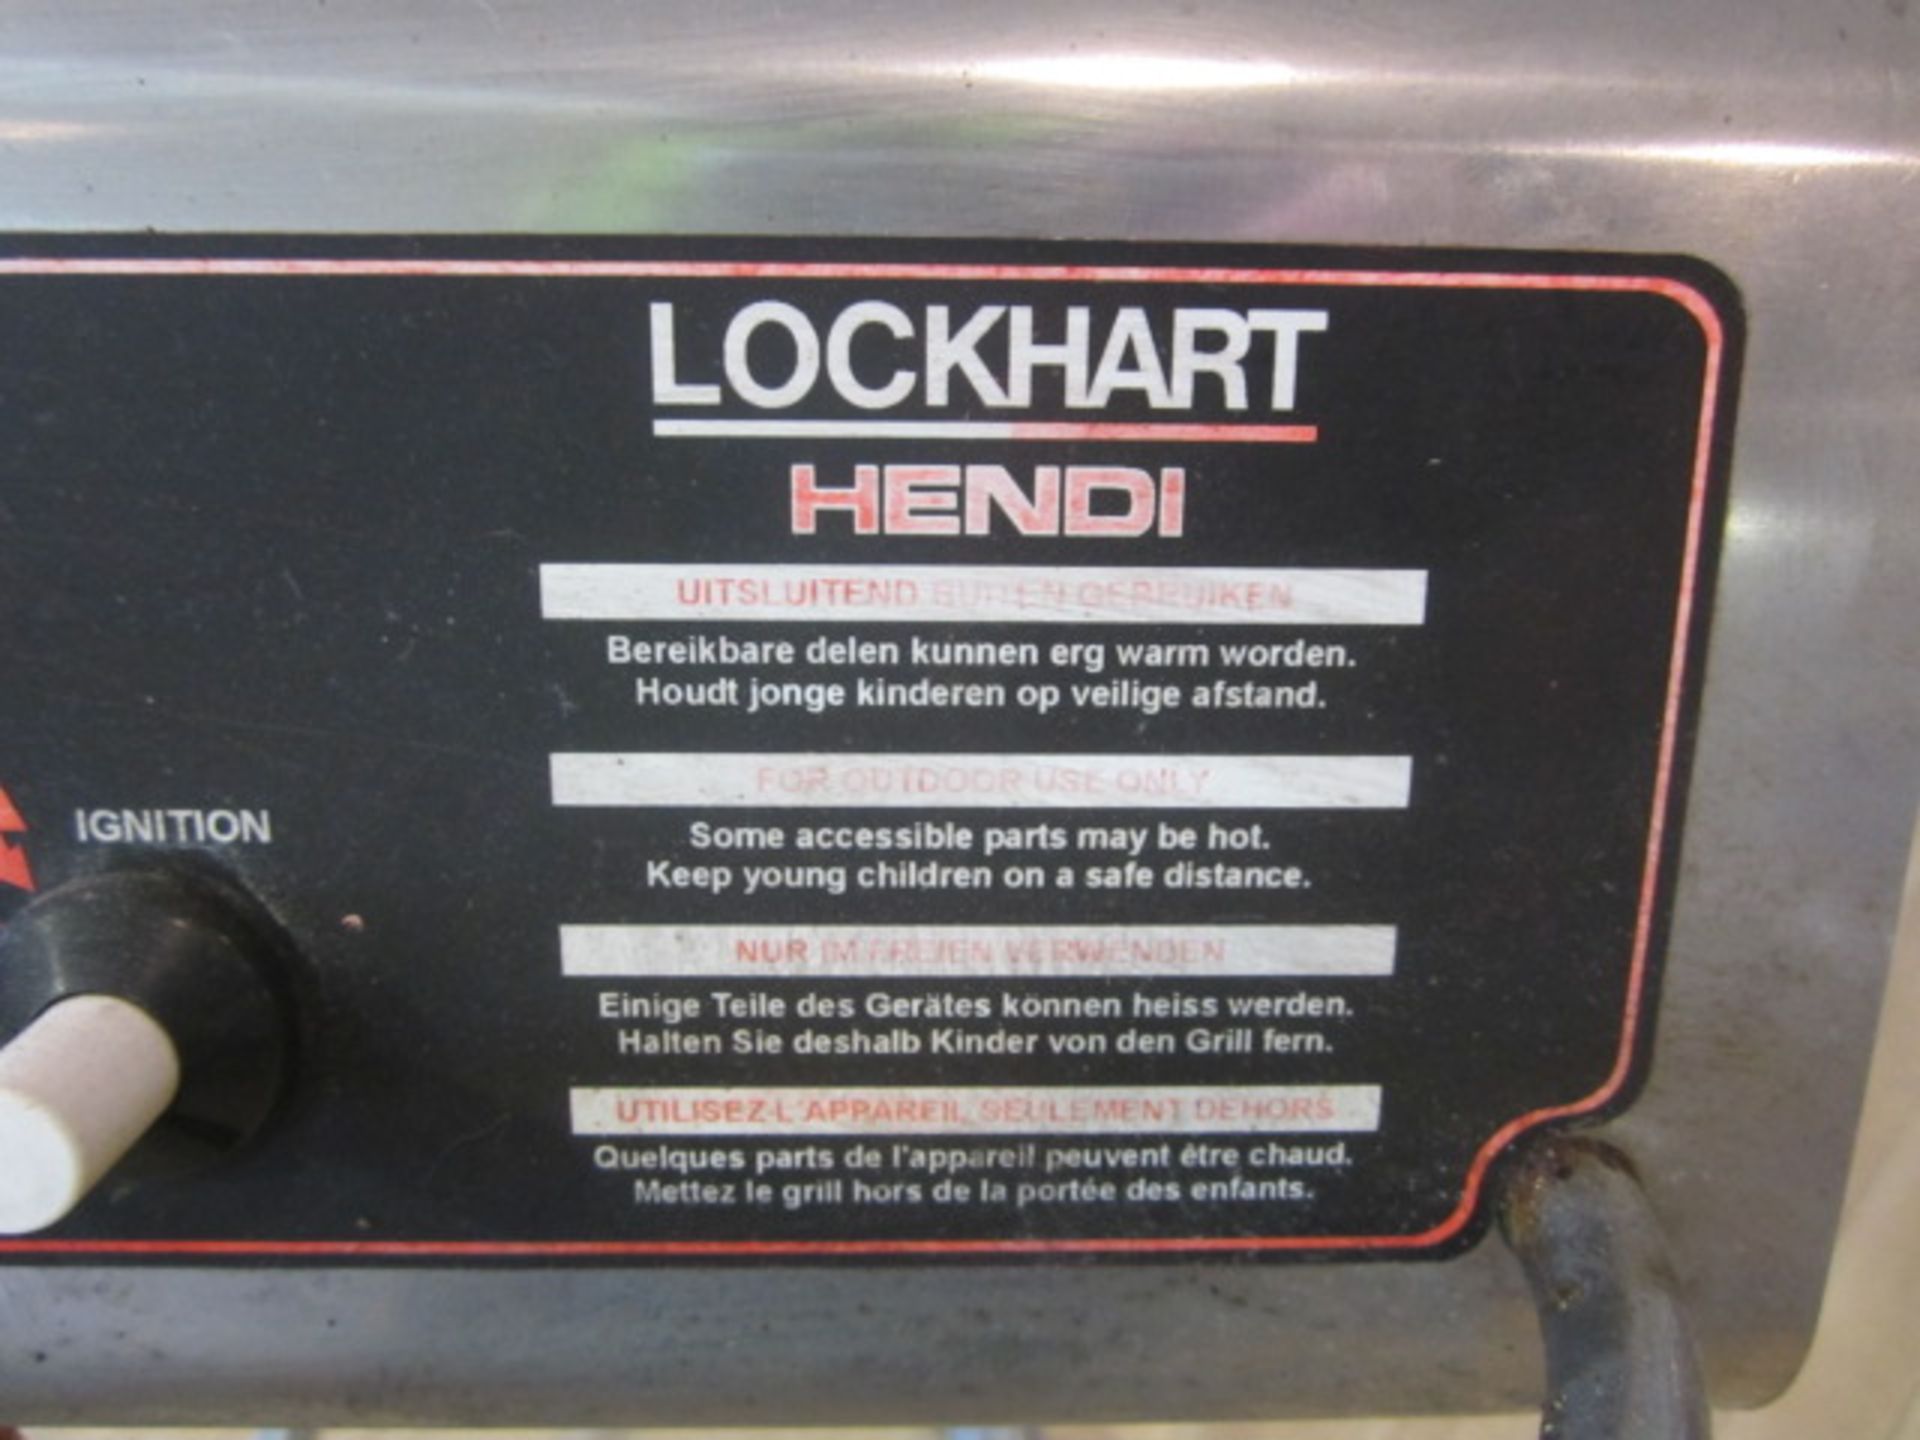 Lockhart Hendi Powergrill Yenon-Pro gas BBQ - Image 3 of 4